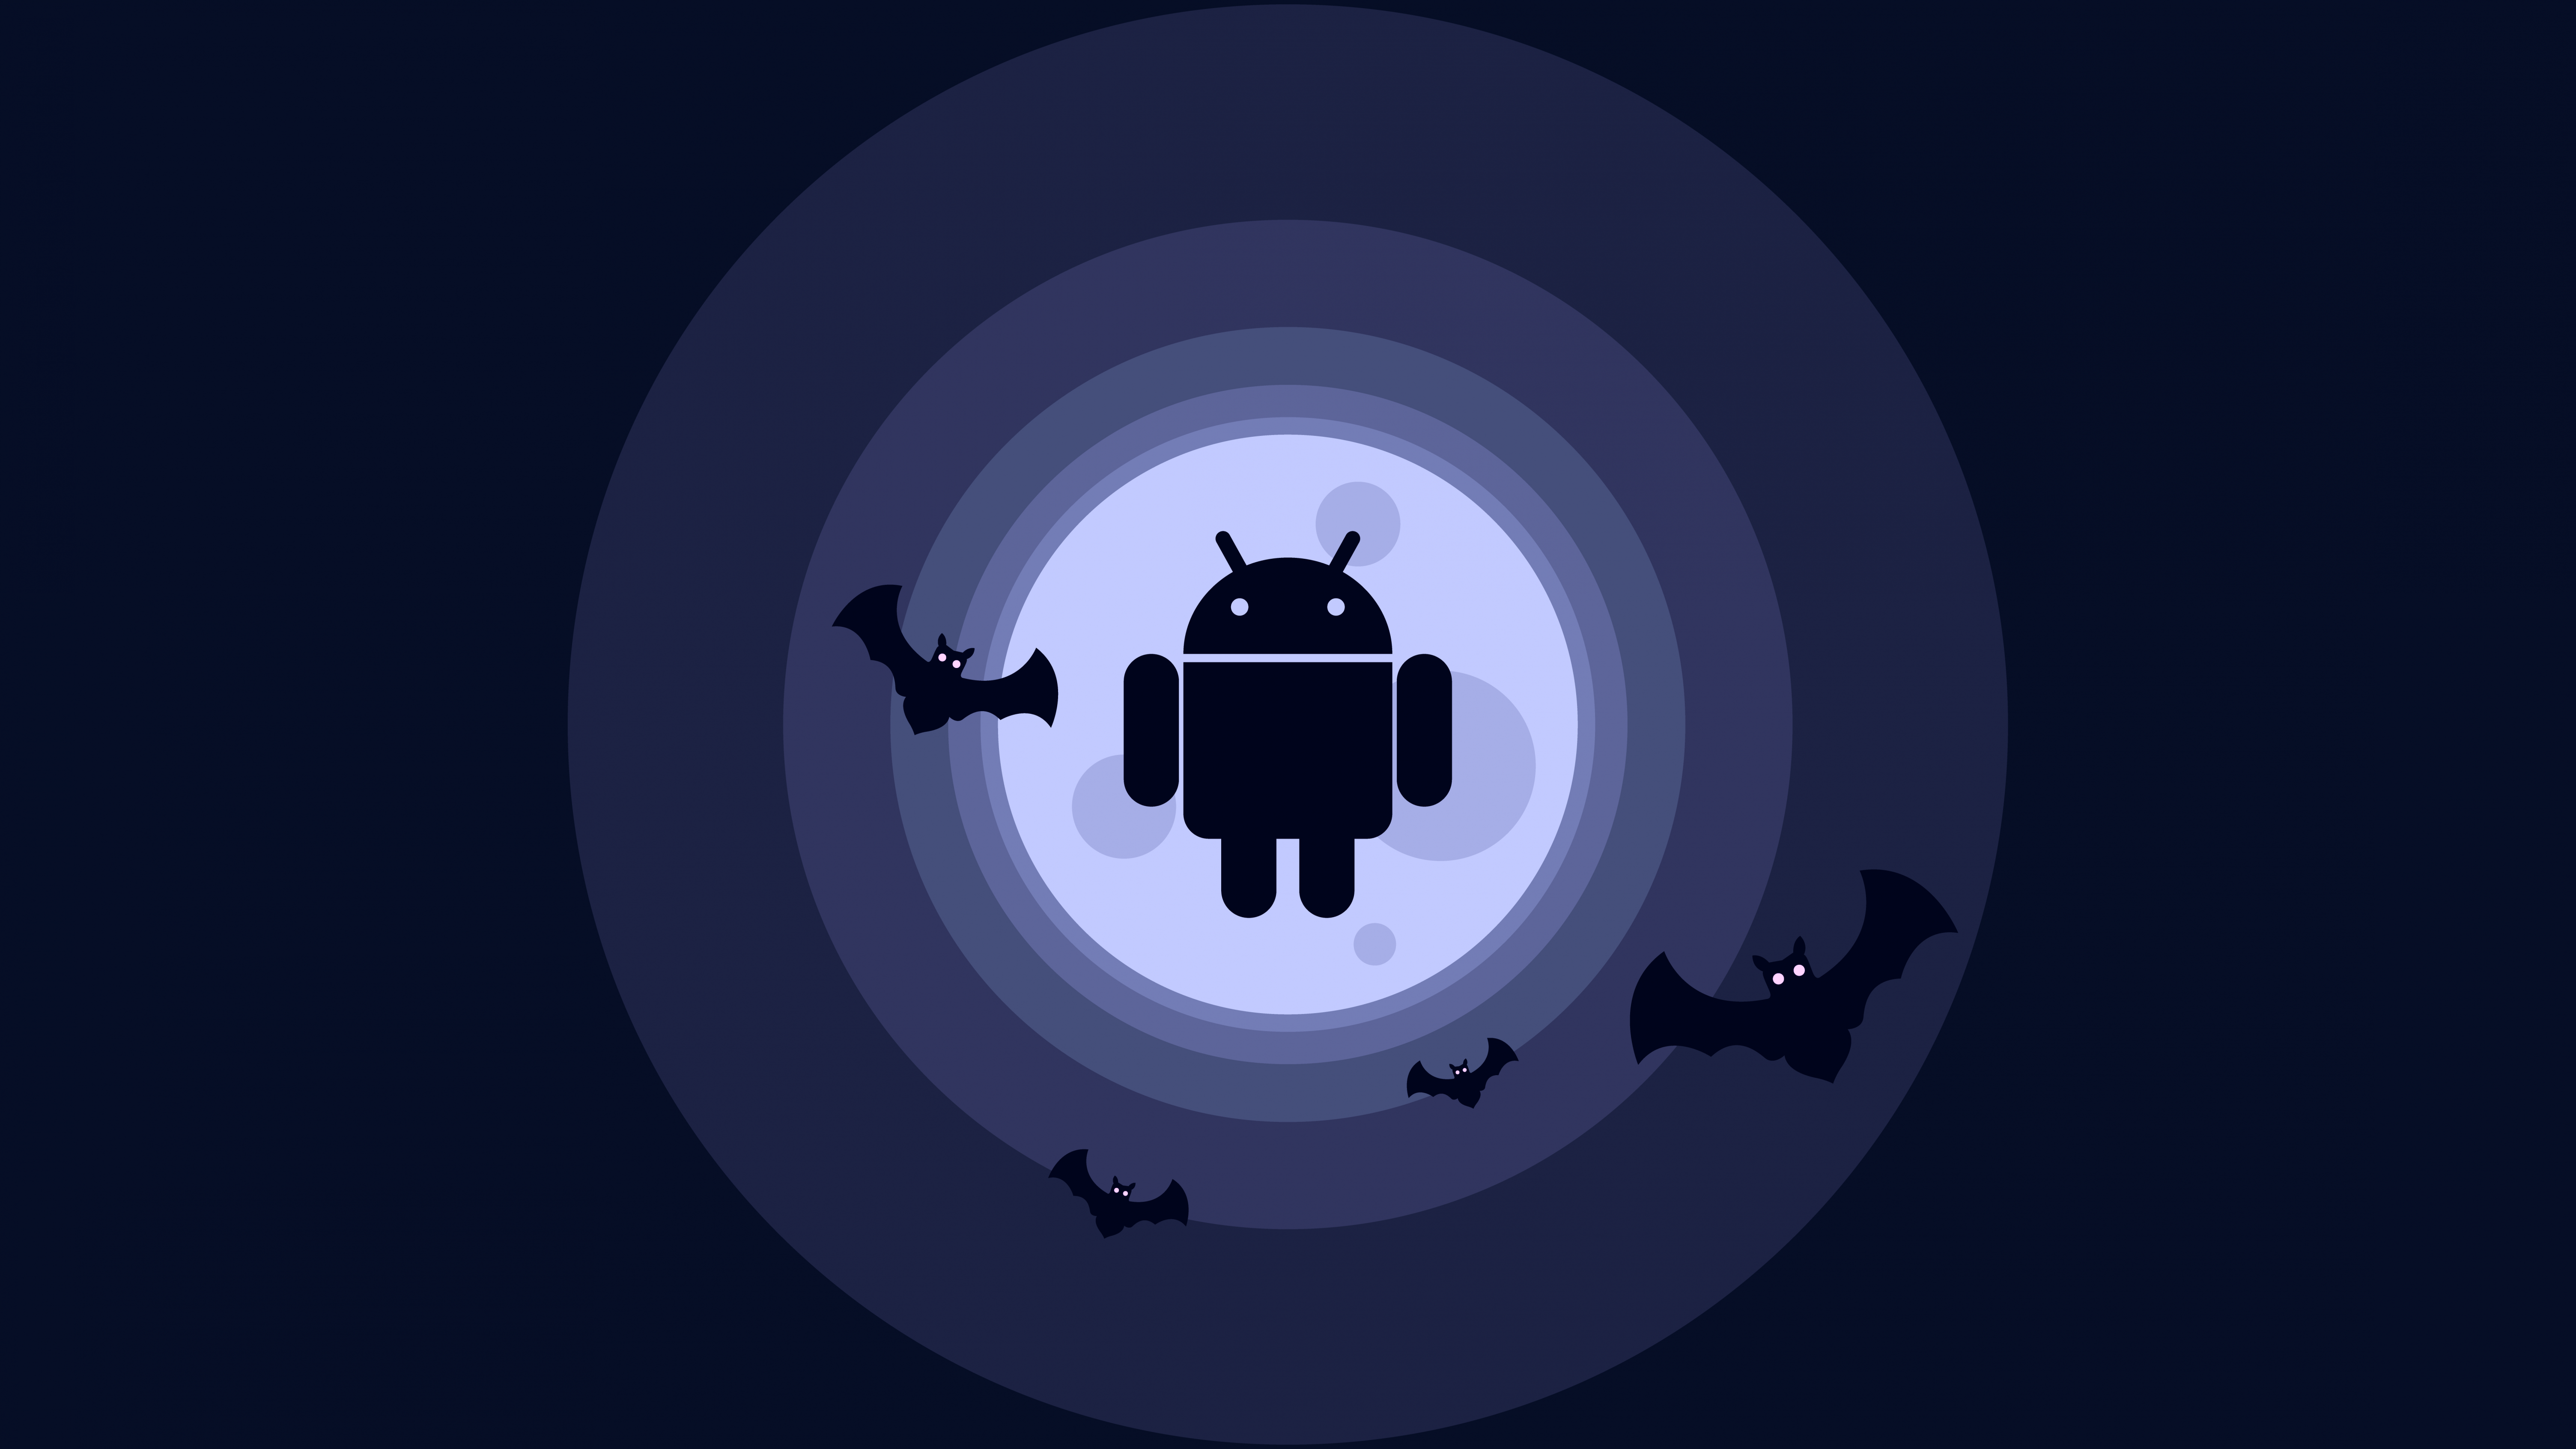 android logo wallpaper hd